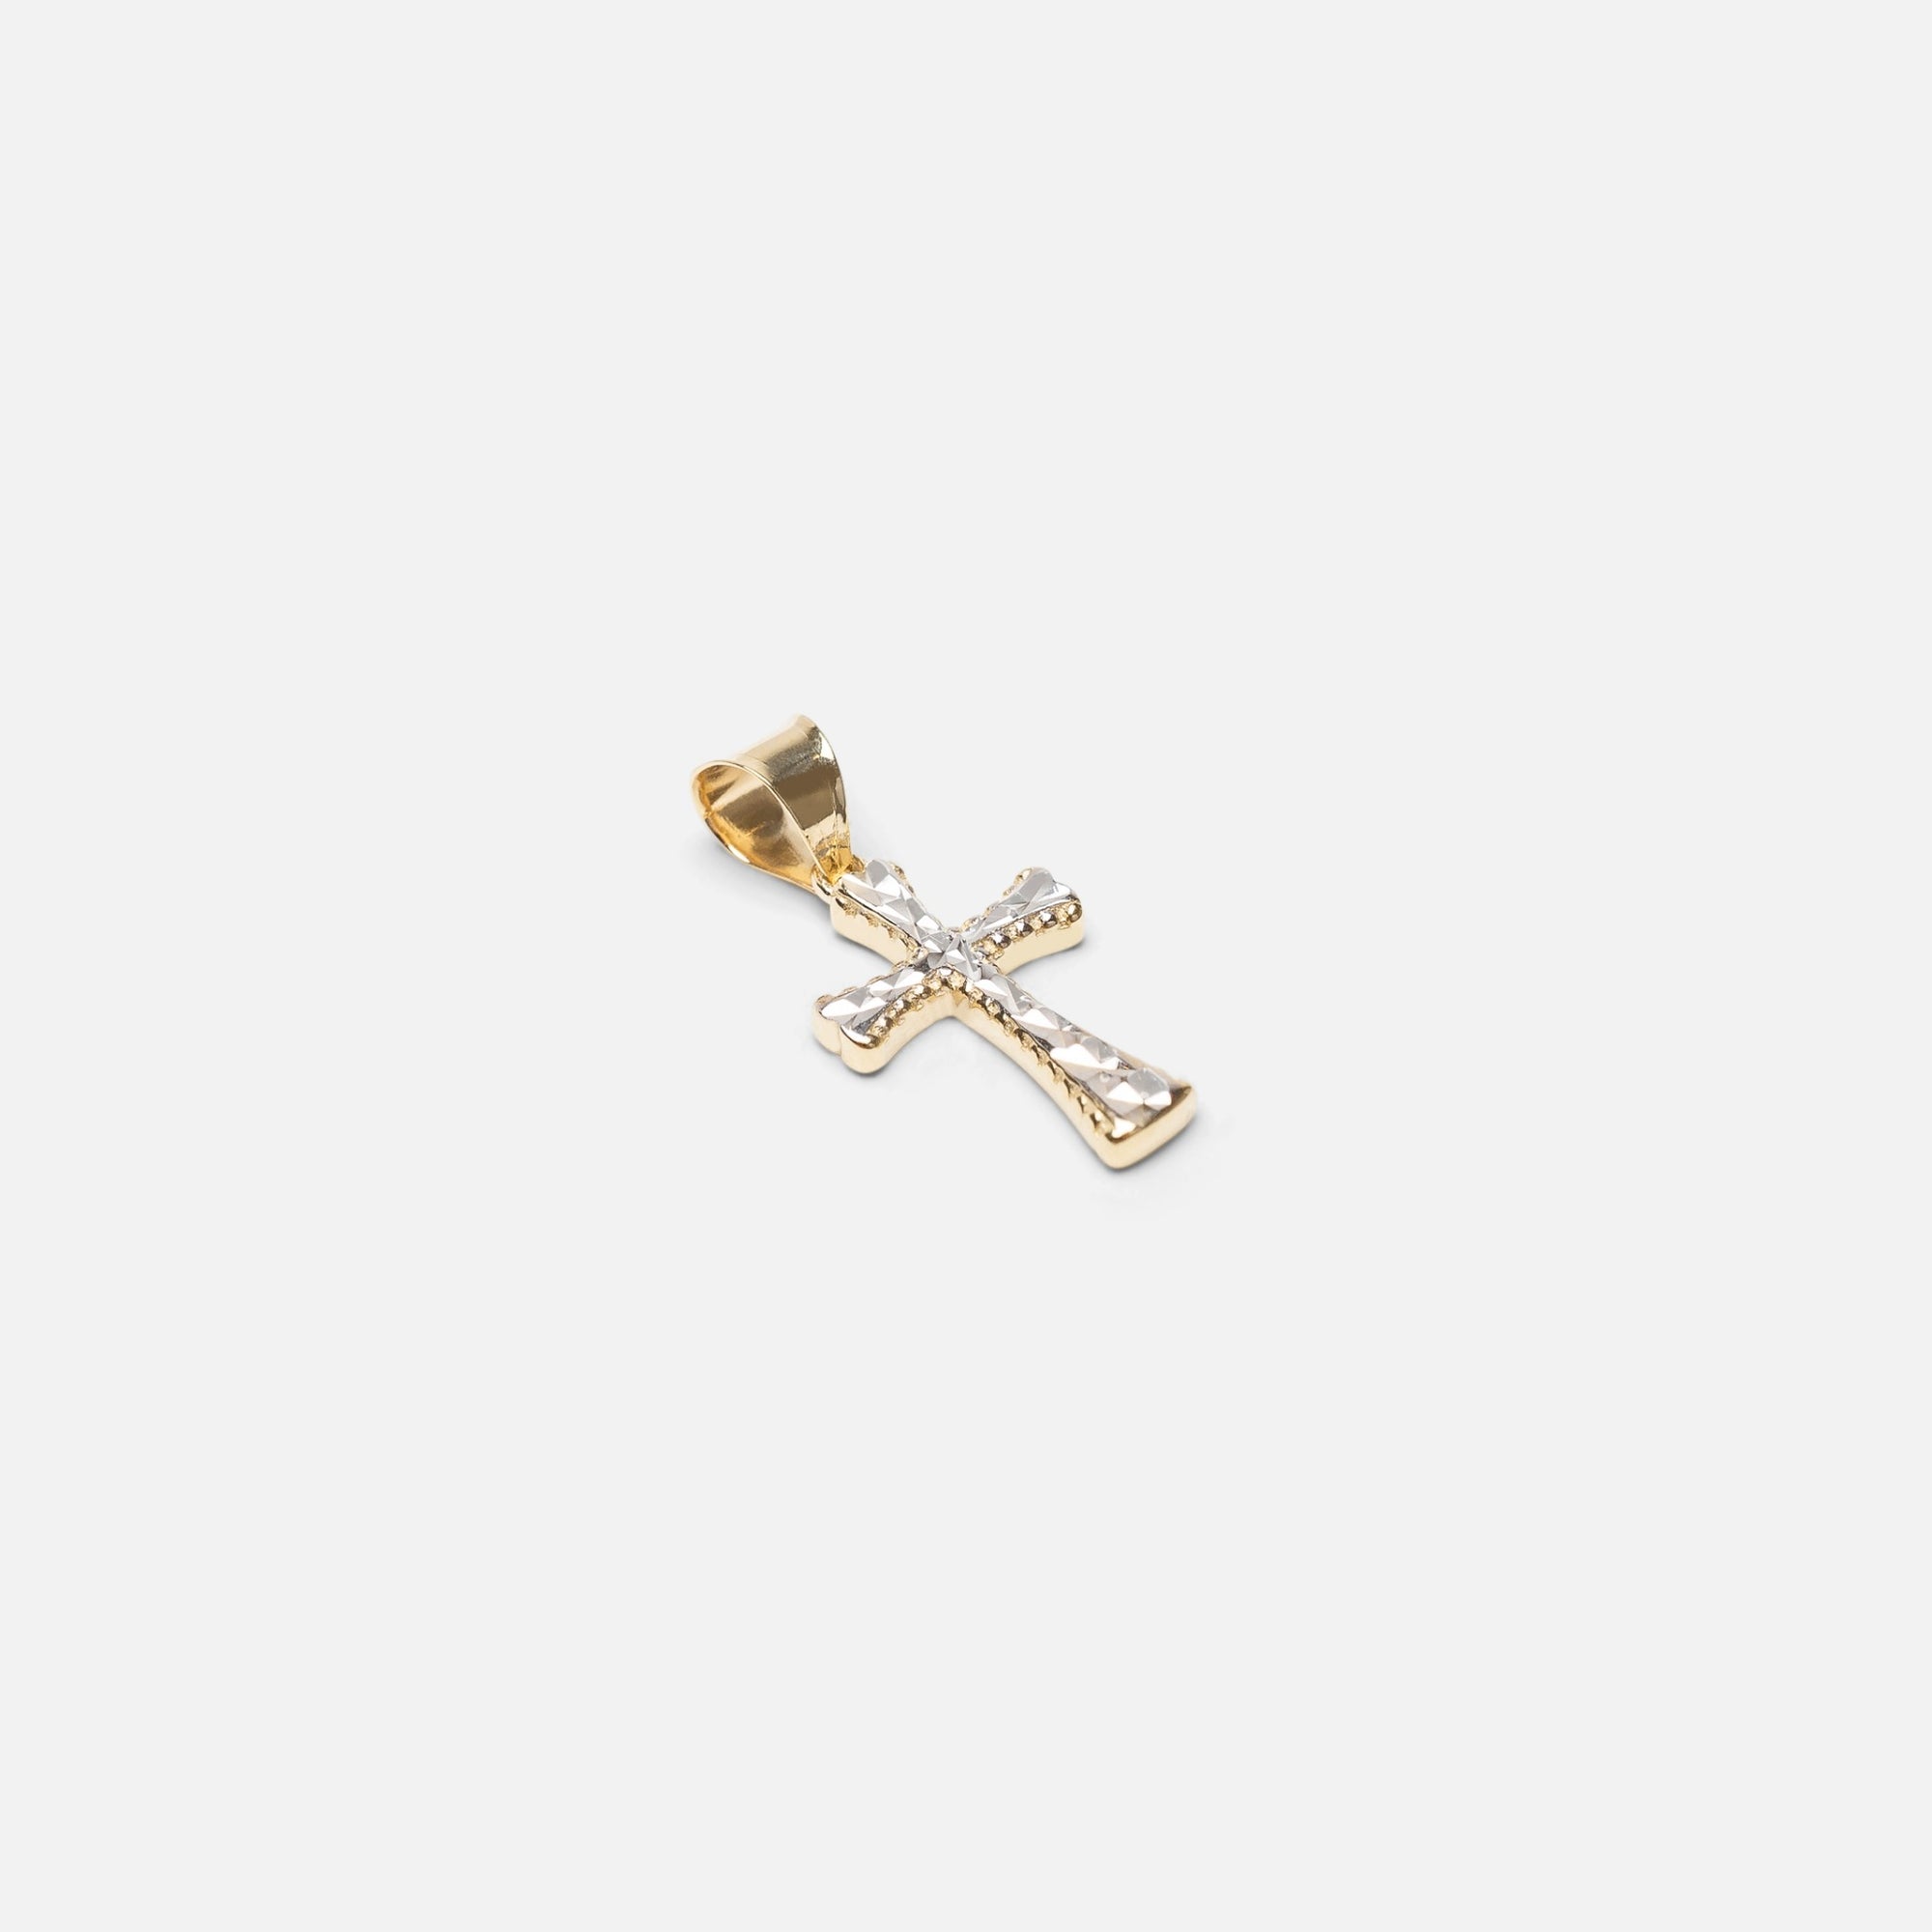 10k yellow gold cross charm with stones – Bizou